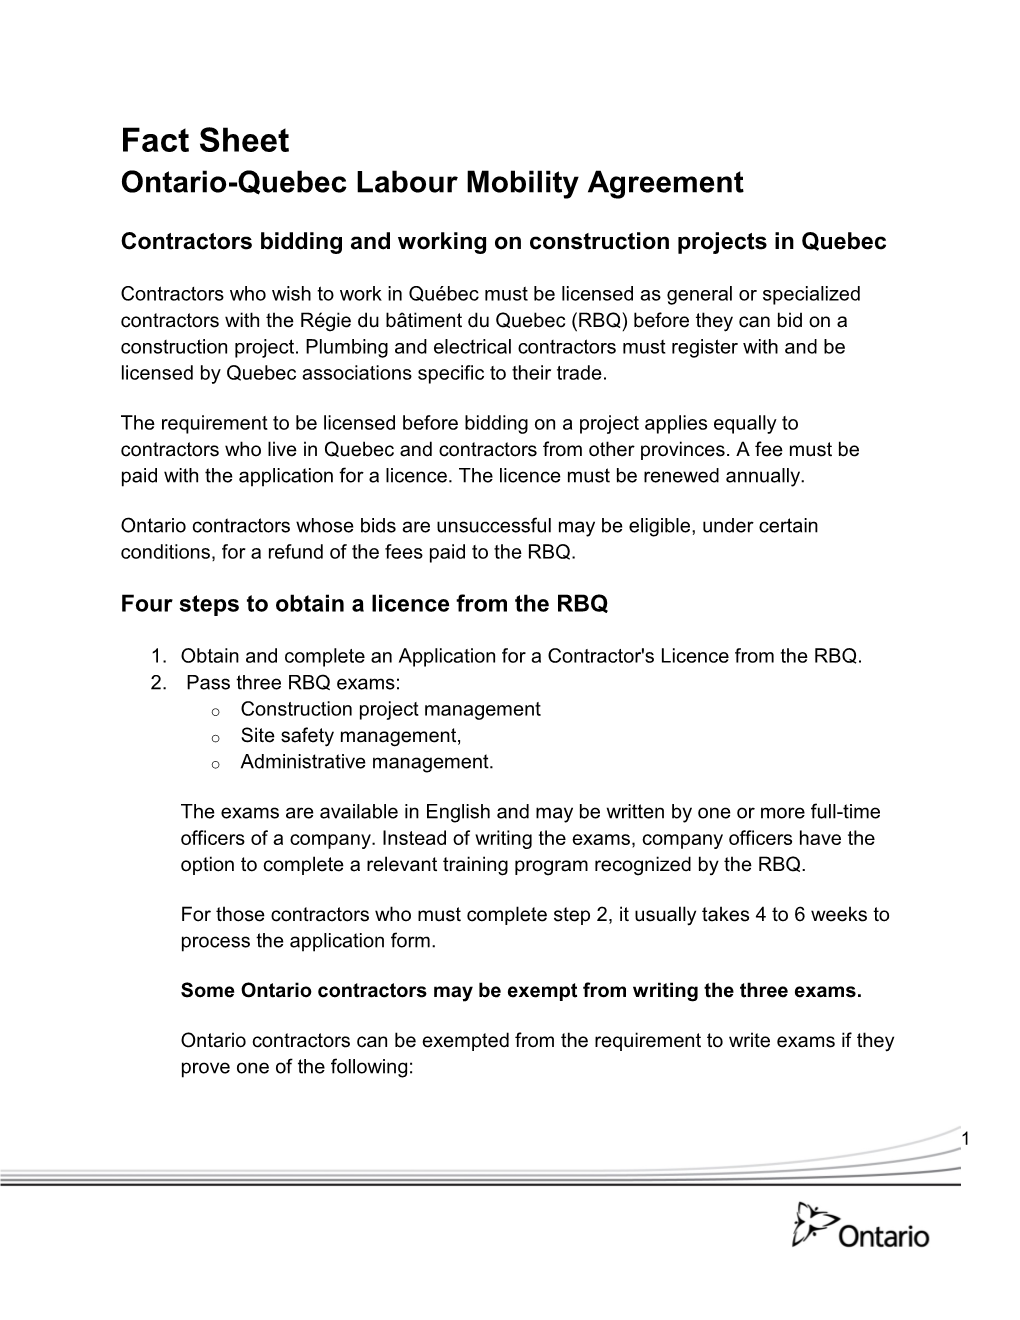 Fact Sheet Ontario-Quebec Labour Mobility Agreement